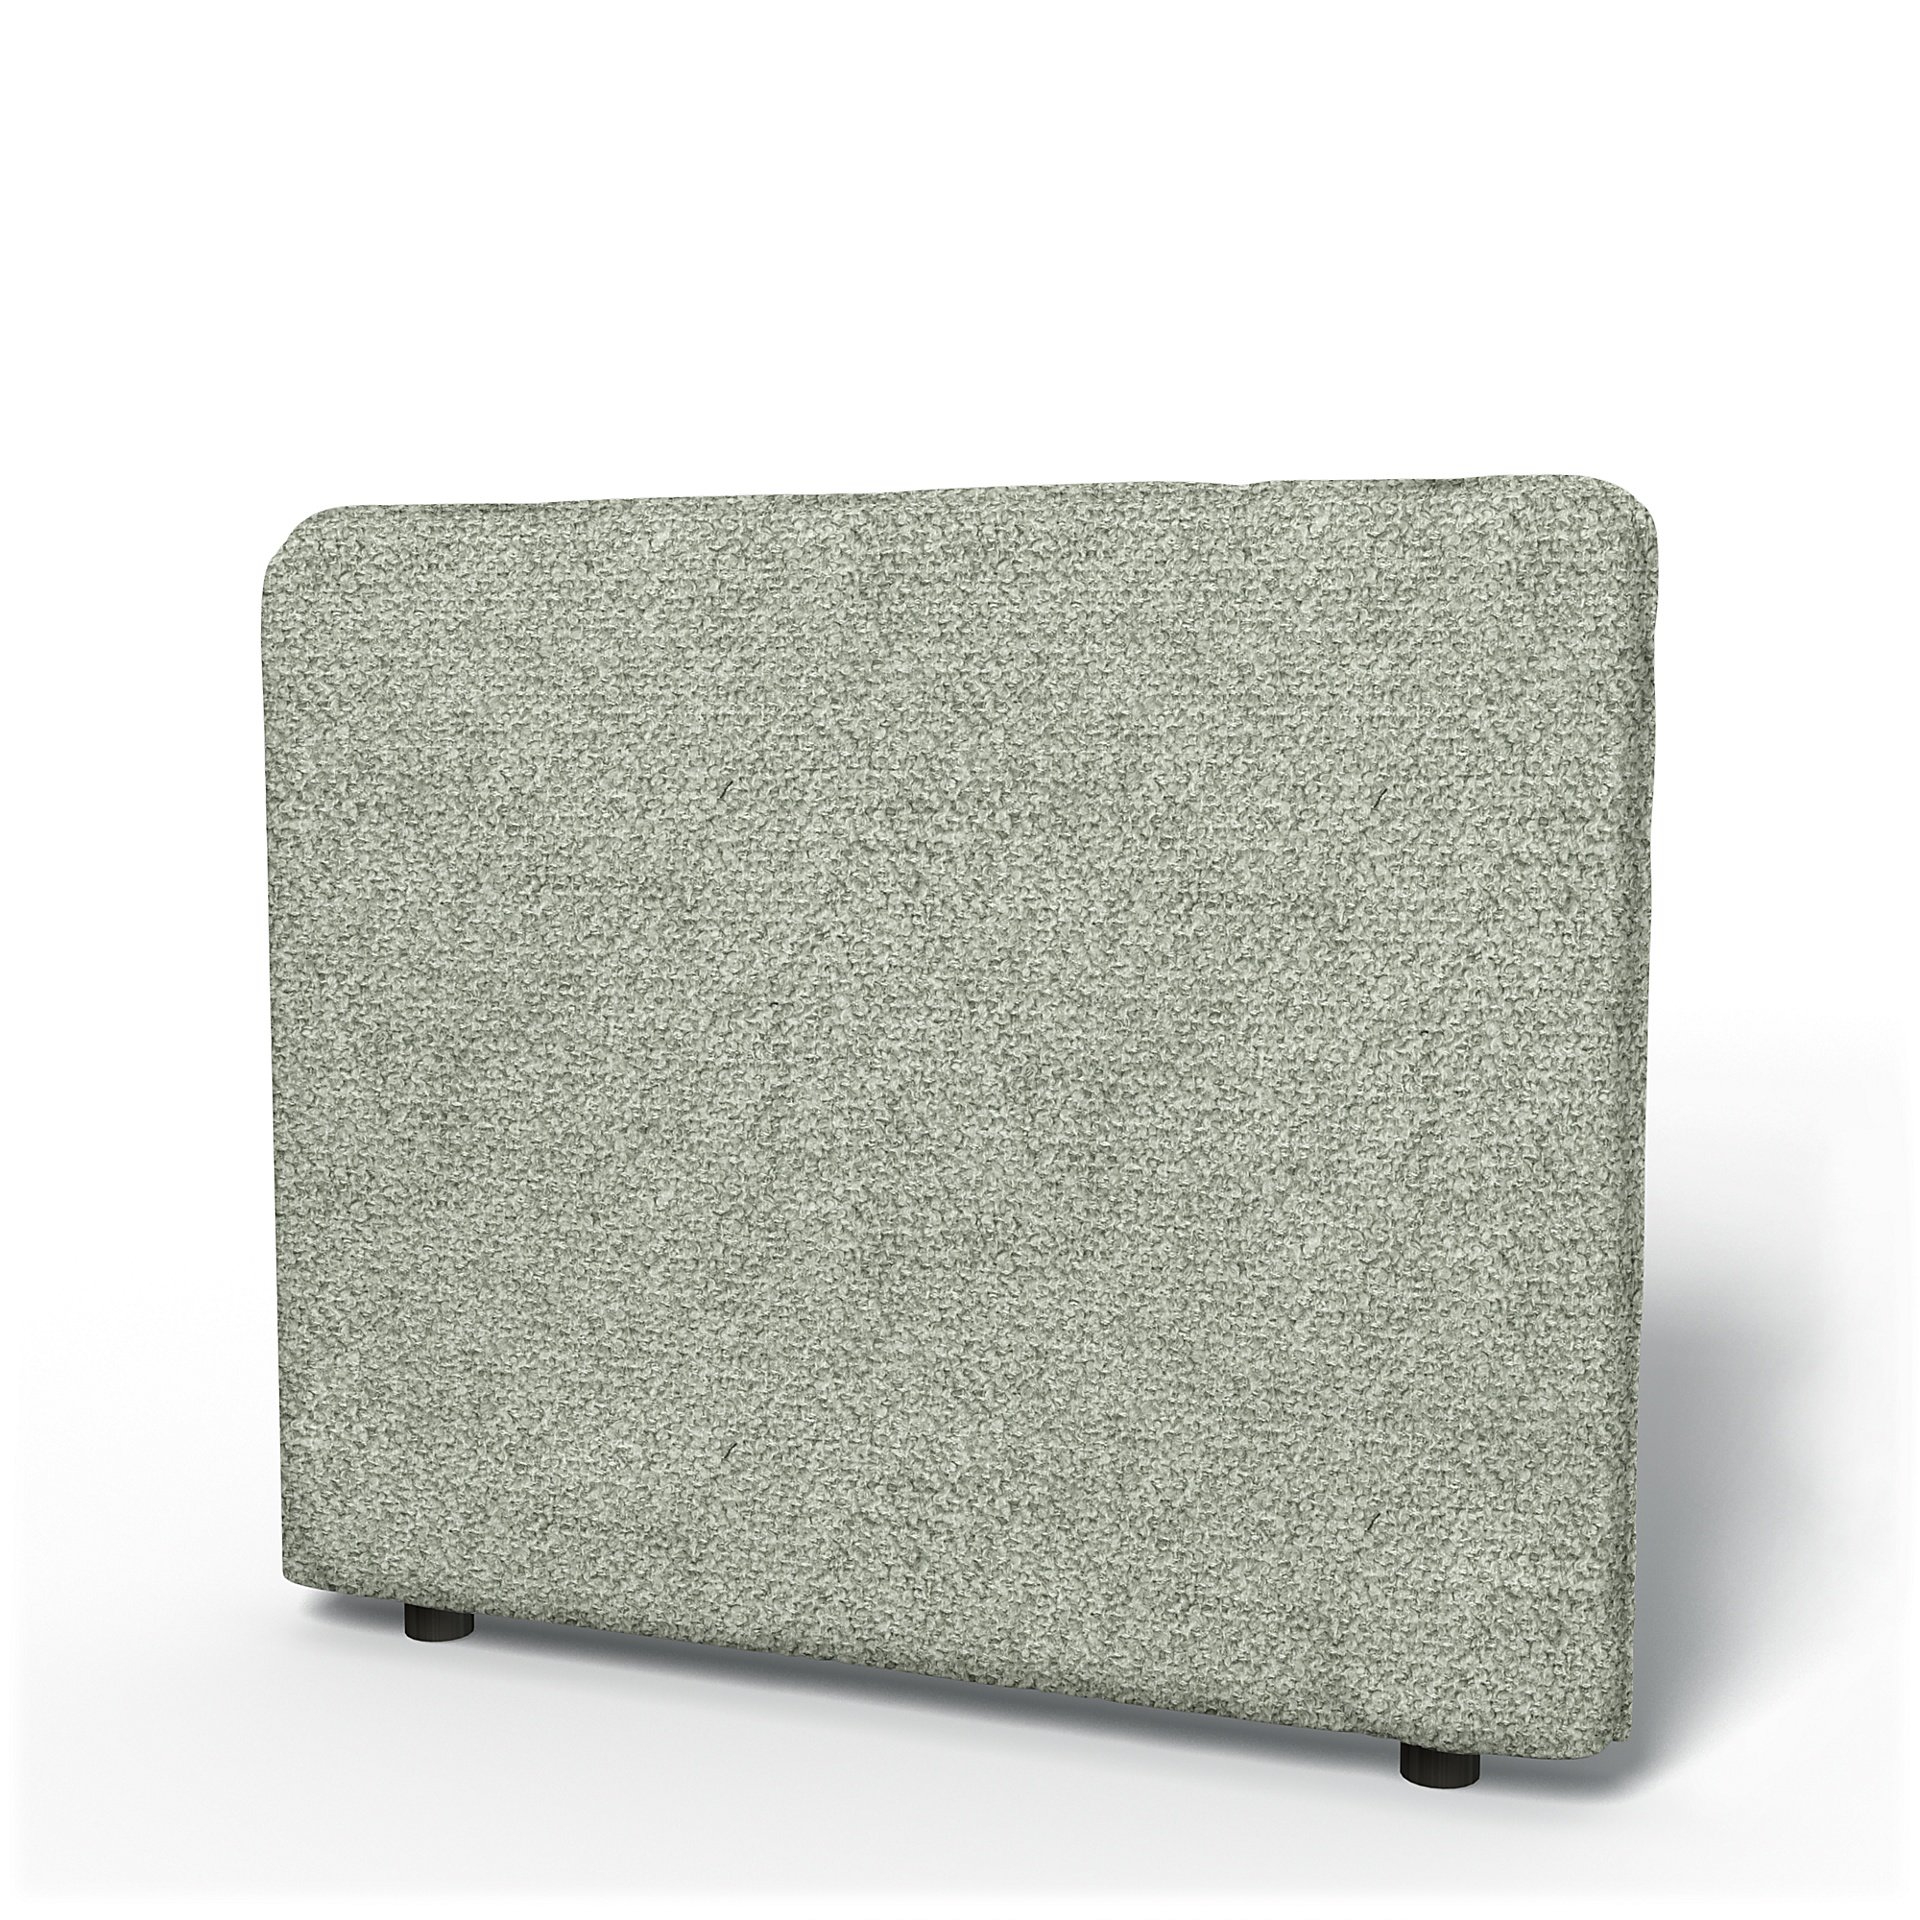 IKEA - Vallentuna Low Backrest Cover 100x80cm 39x32in, Pistachio, Boucle & Texture - Bemz